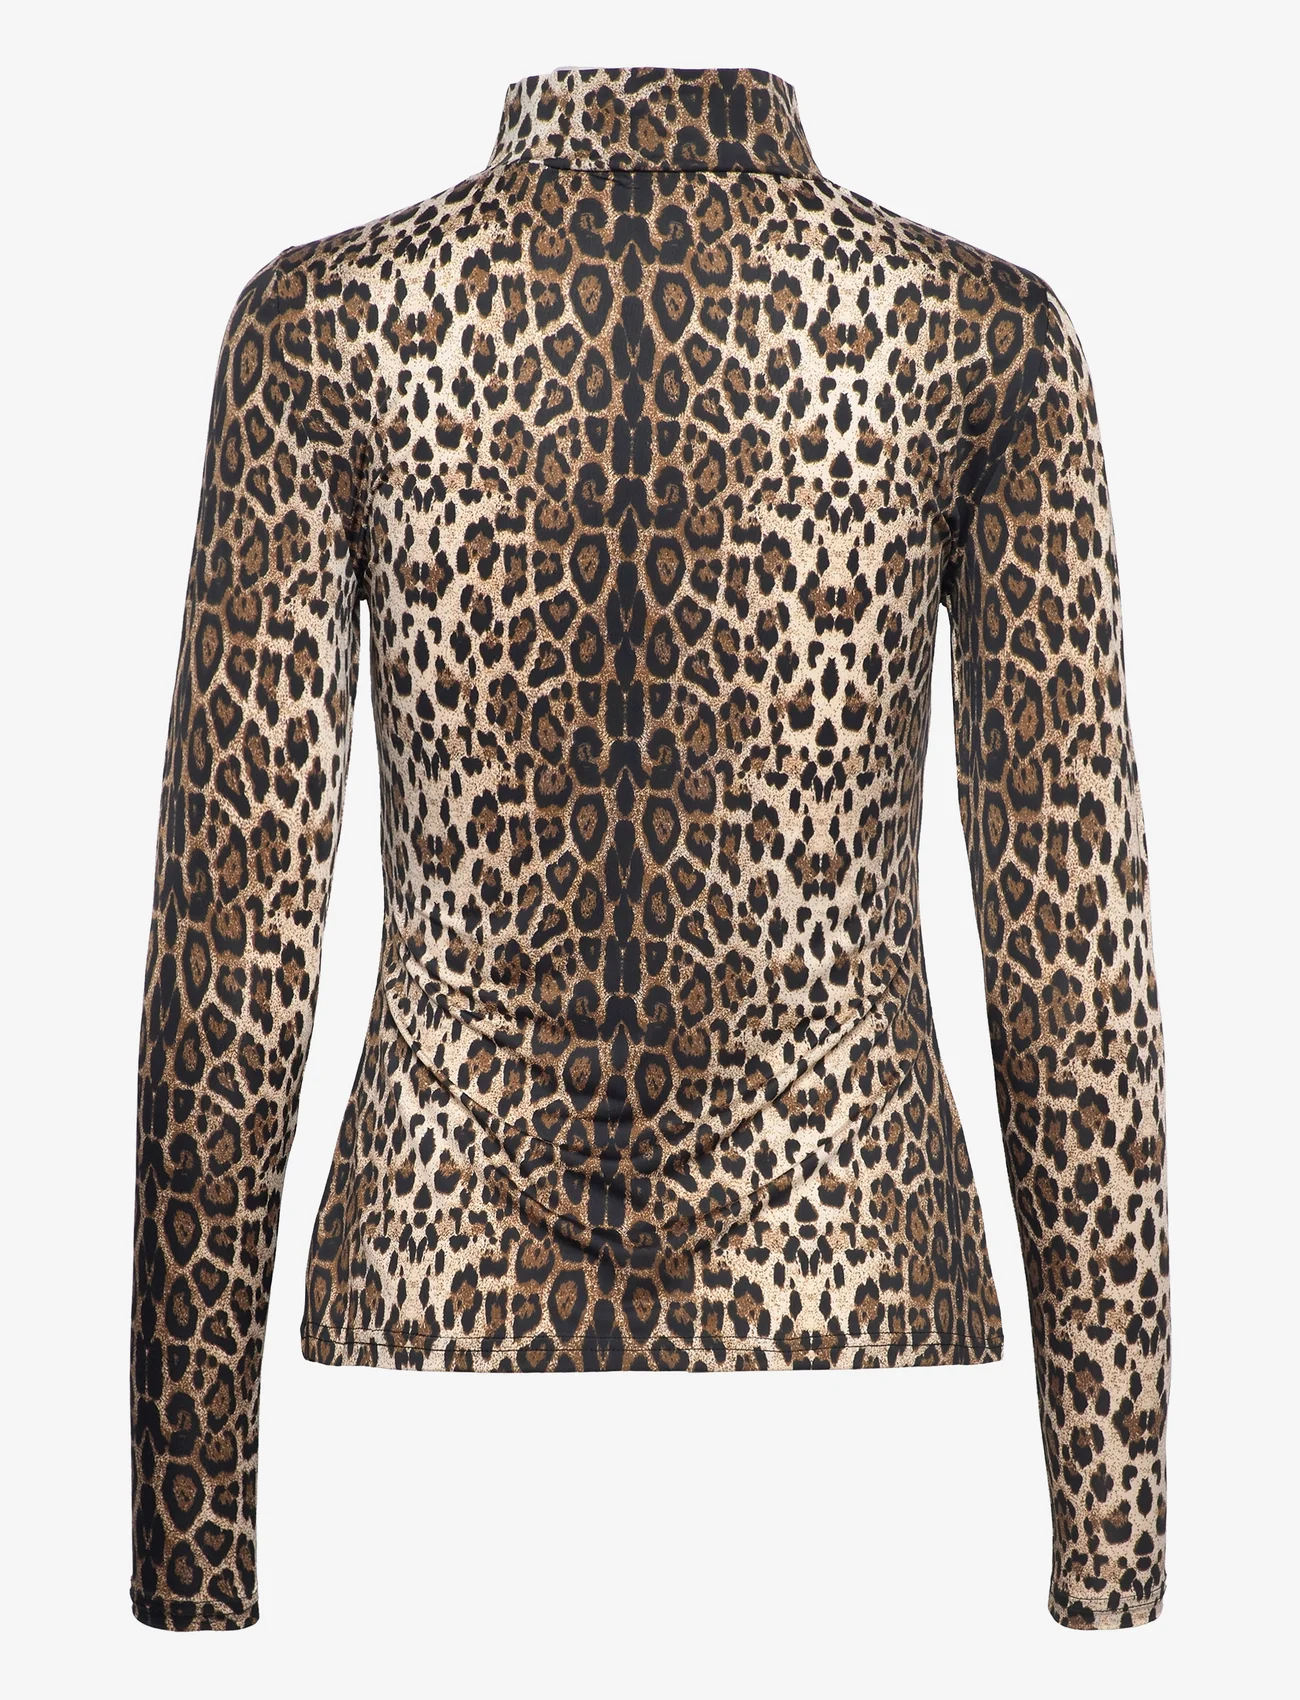 Sofie Schnoor - T-shirt - palaidinukės ilgomis rankovėmis - leopard - 1